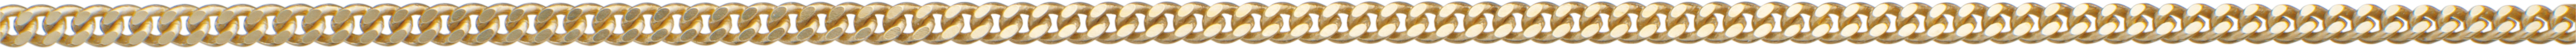 ankerketting plat goud 333/-gg 1,70mm, draad dikte 0,50mm